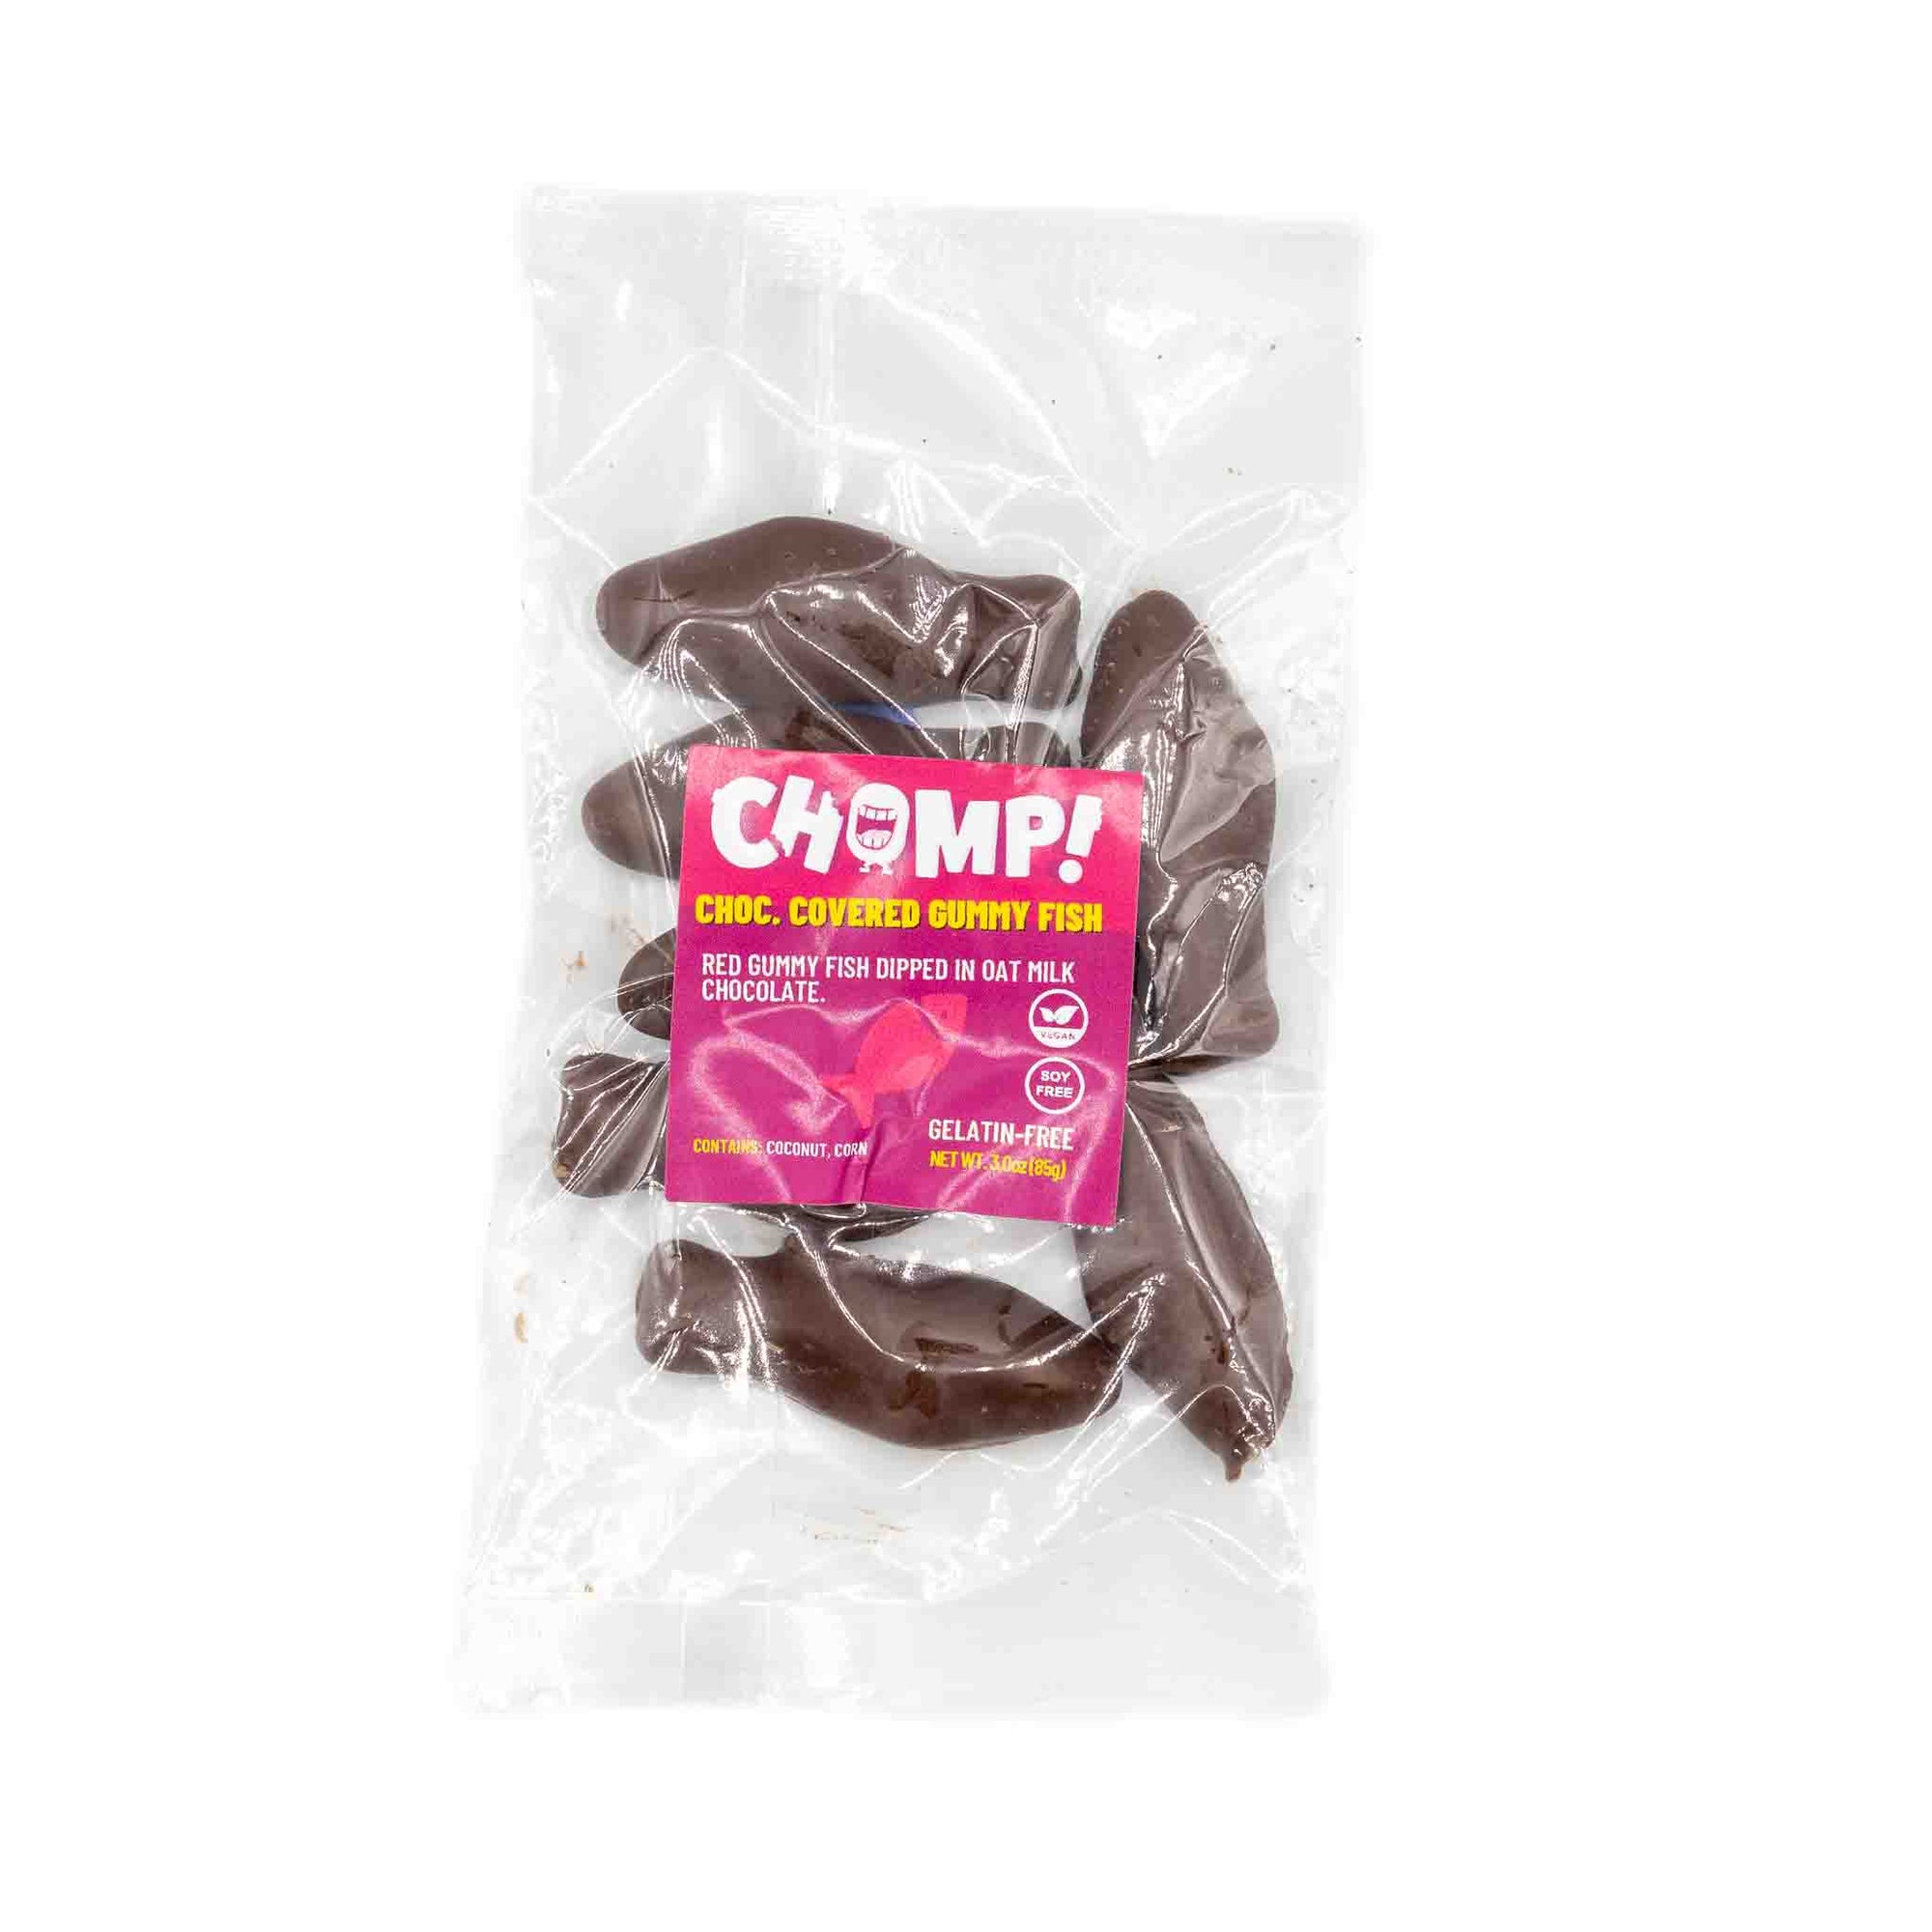 Chomp Chocolate Cinnamon Bears - BESTIES Vegan Paradise